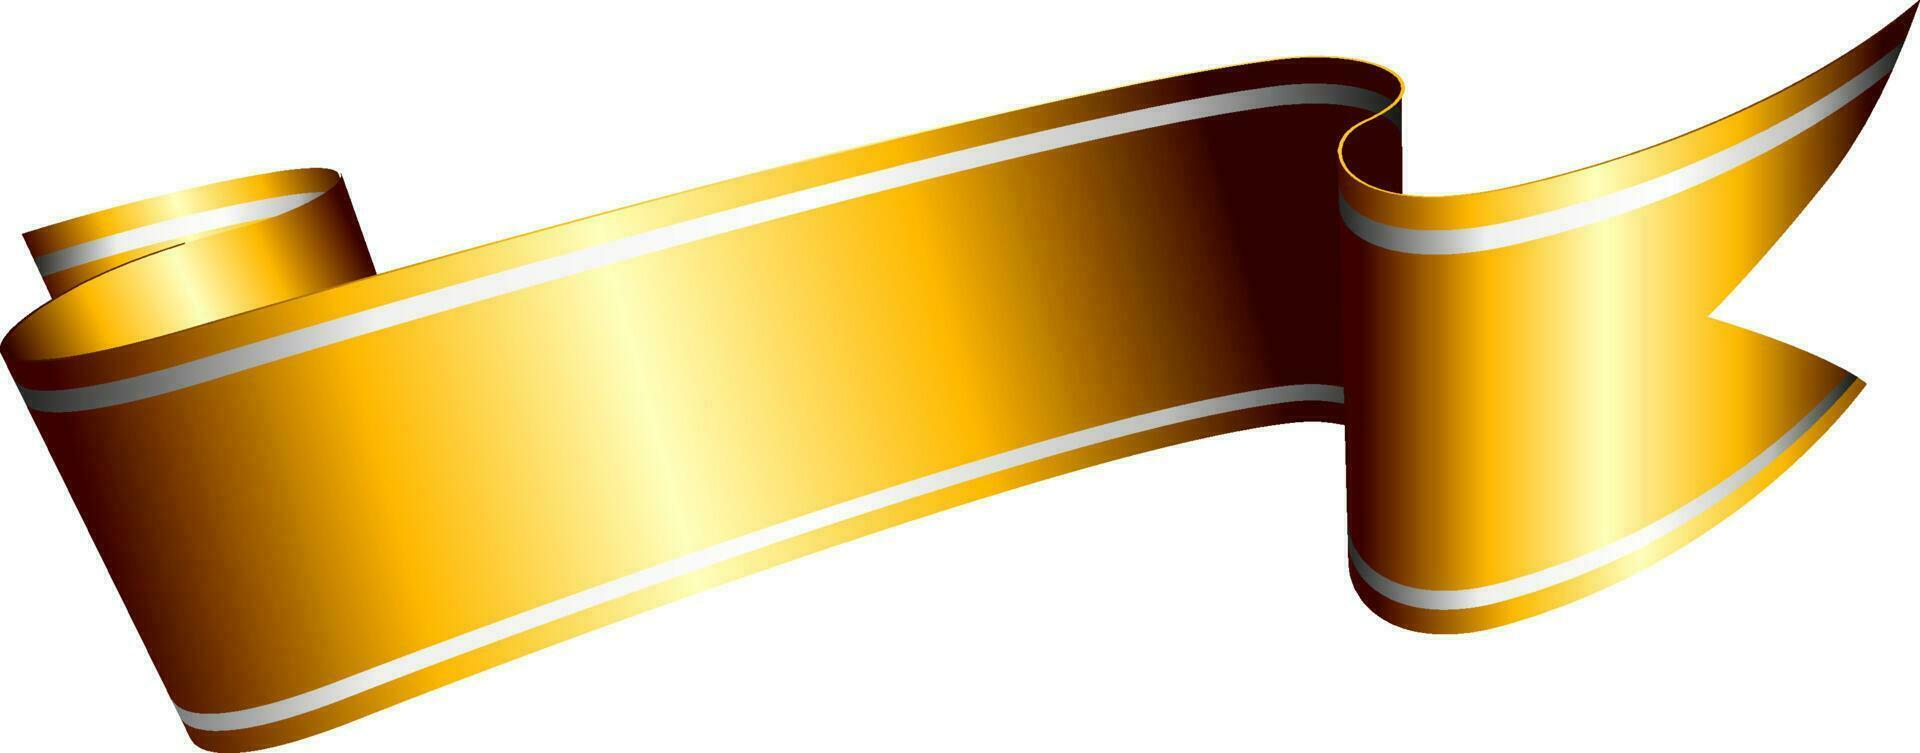 glänzend, glänzend 3d golden Band Illustration. vektor